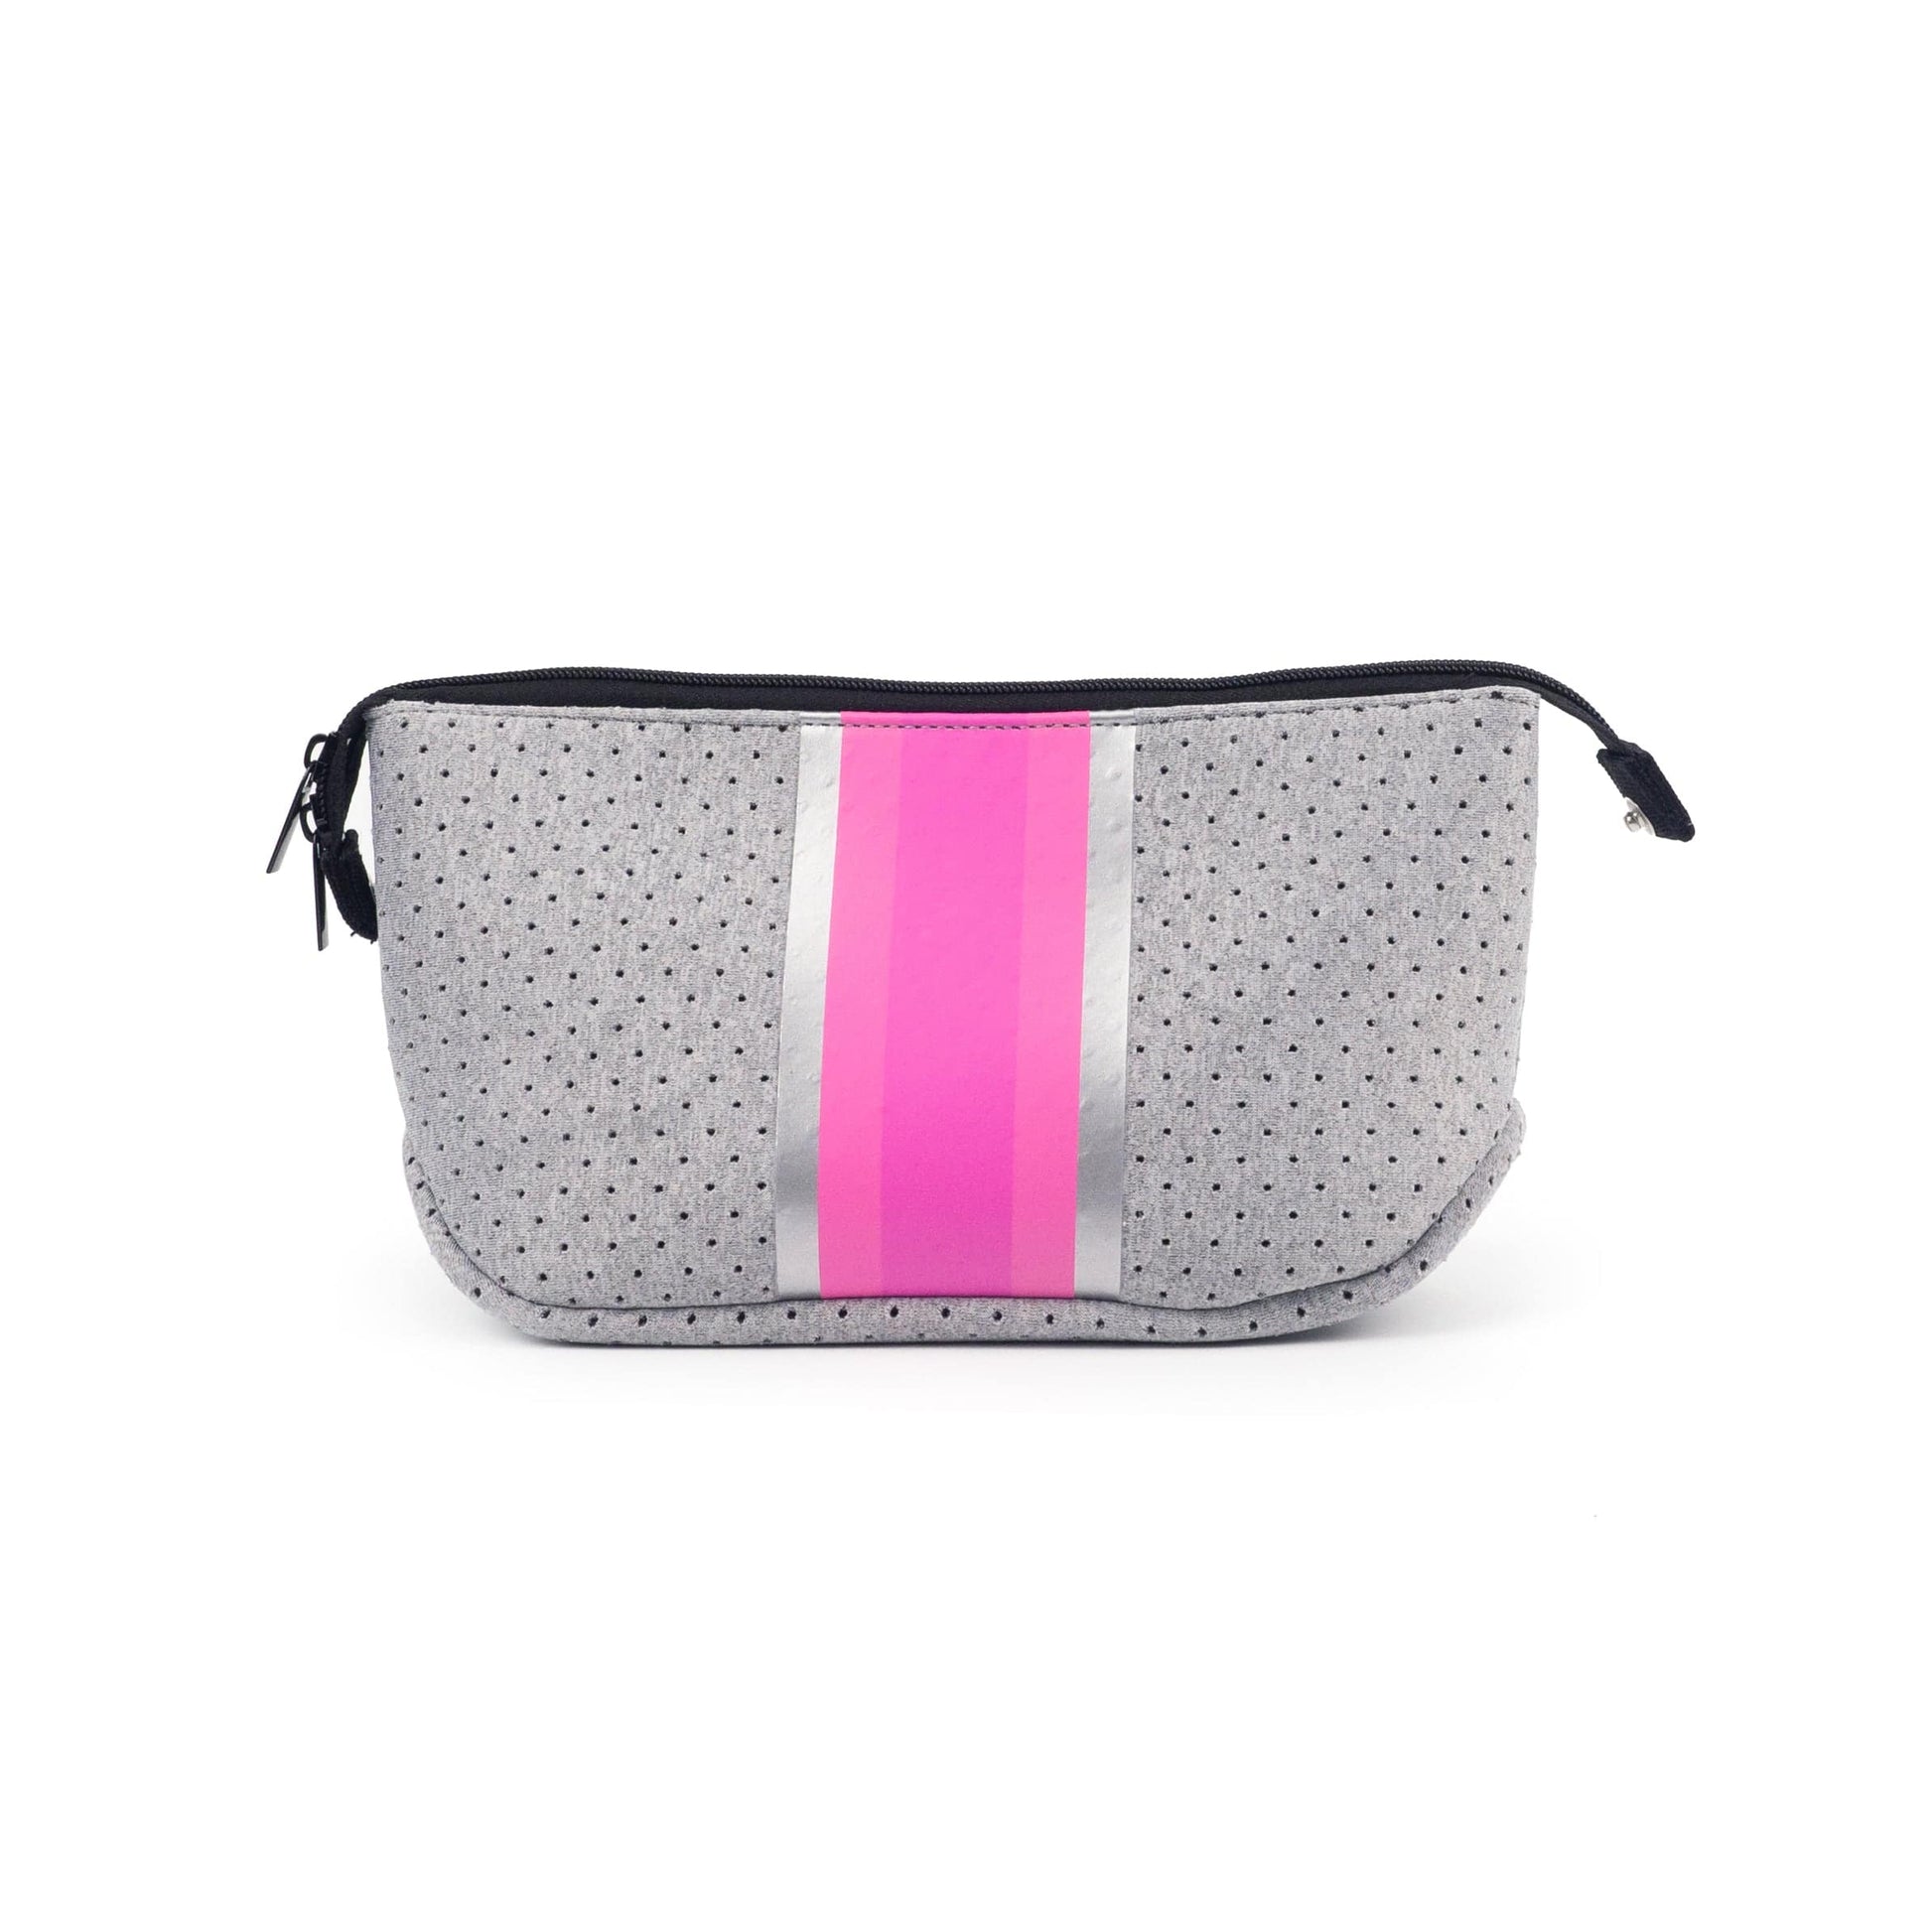 Shop Neoprene Bags Online - Totes, Makeup Bags & More – PinkTag